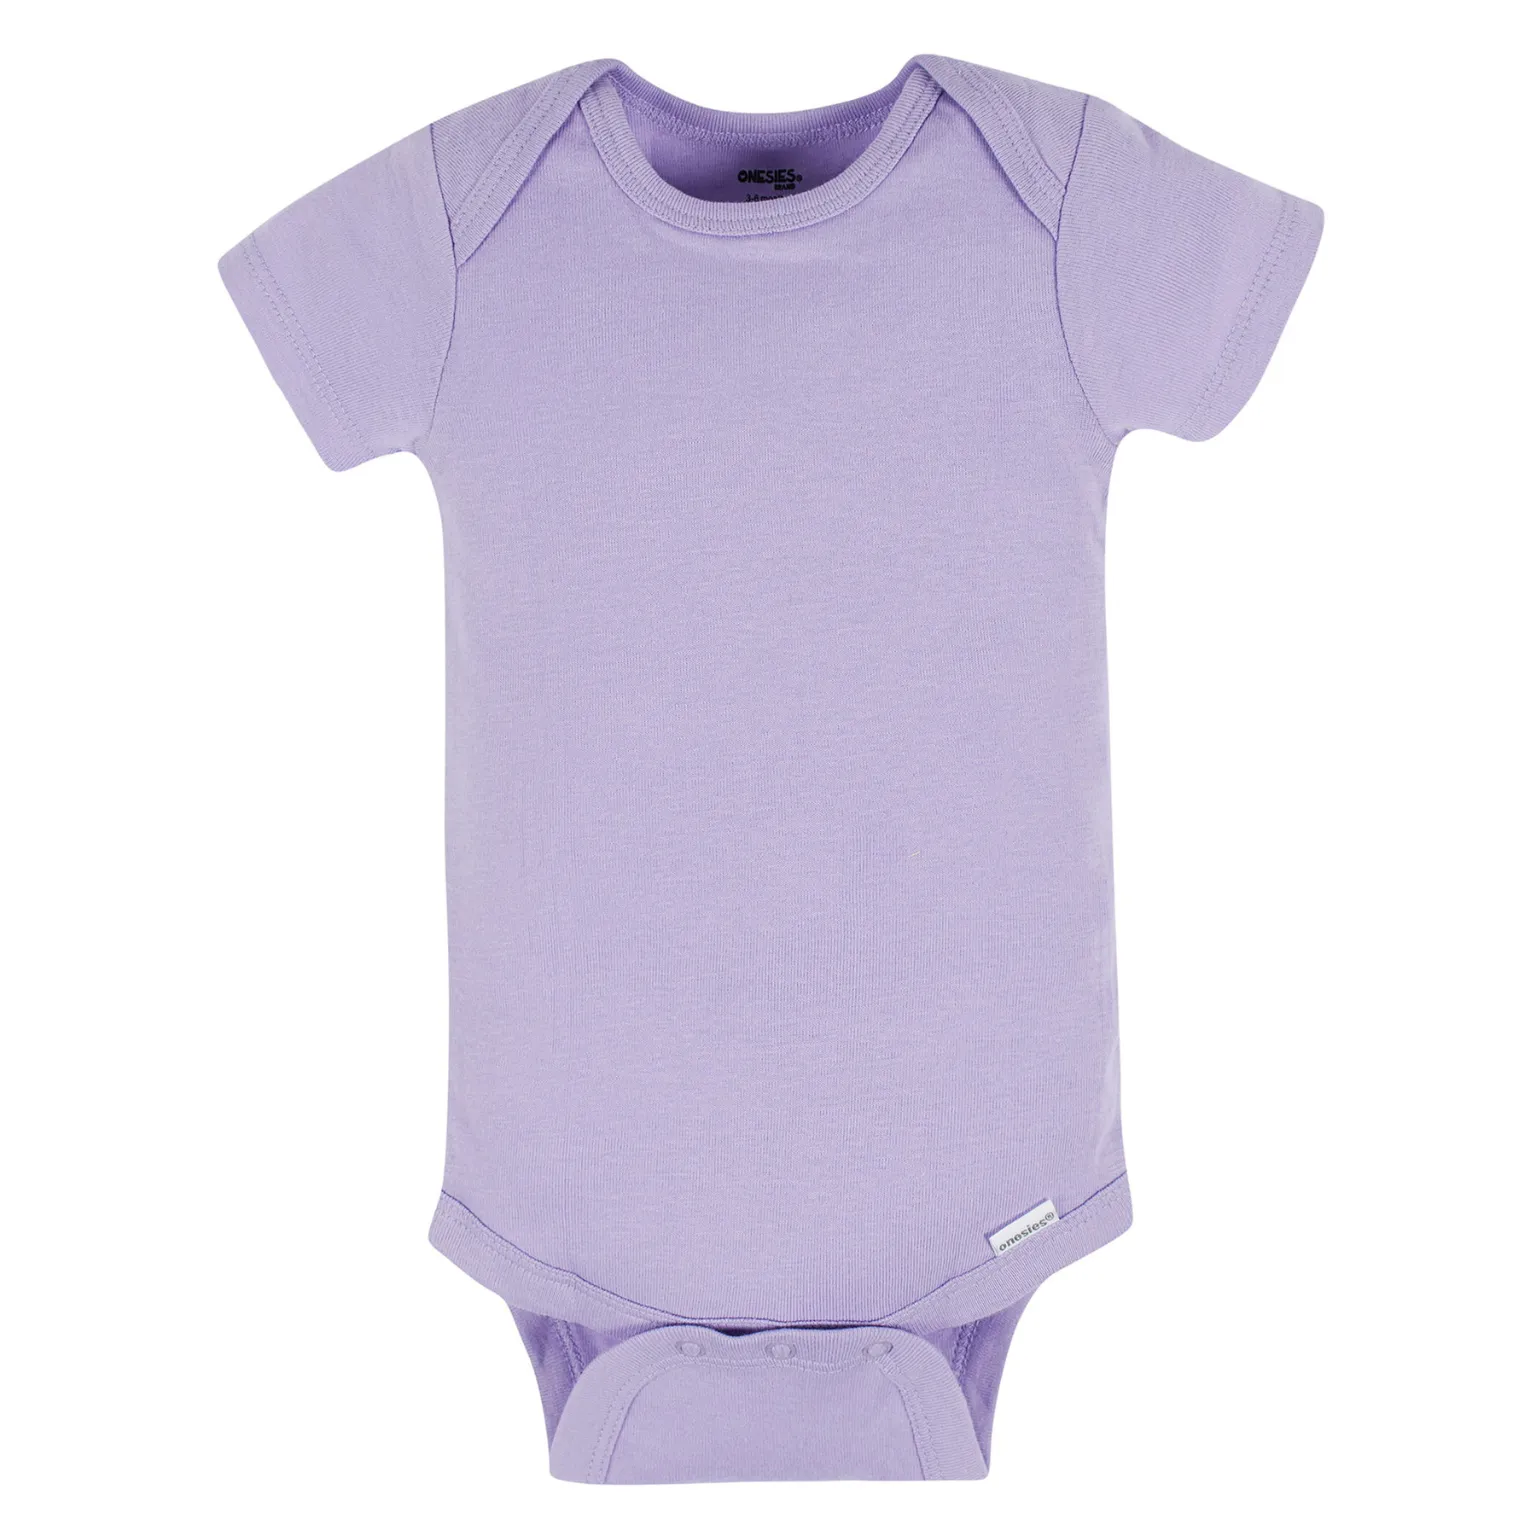 Premium OEM/ODM Baby bodysuits manufacturing service